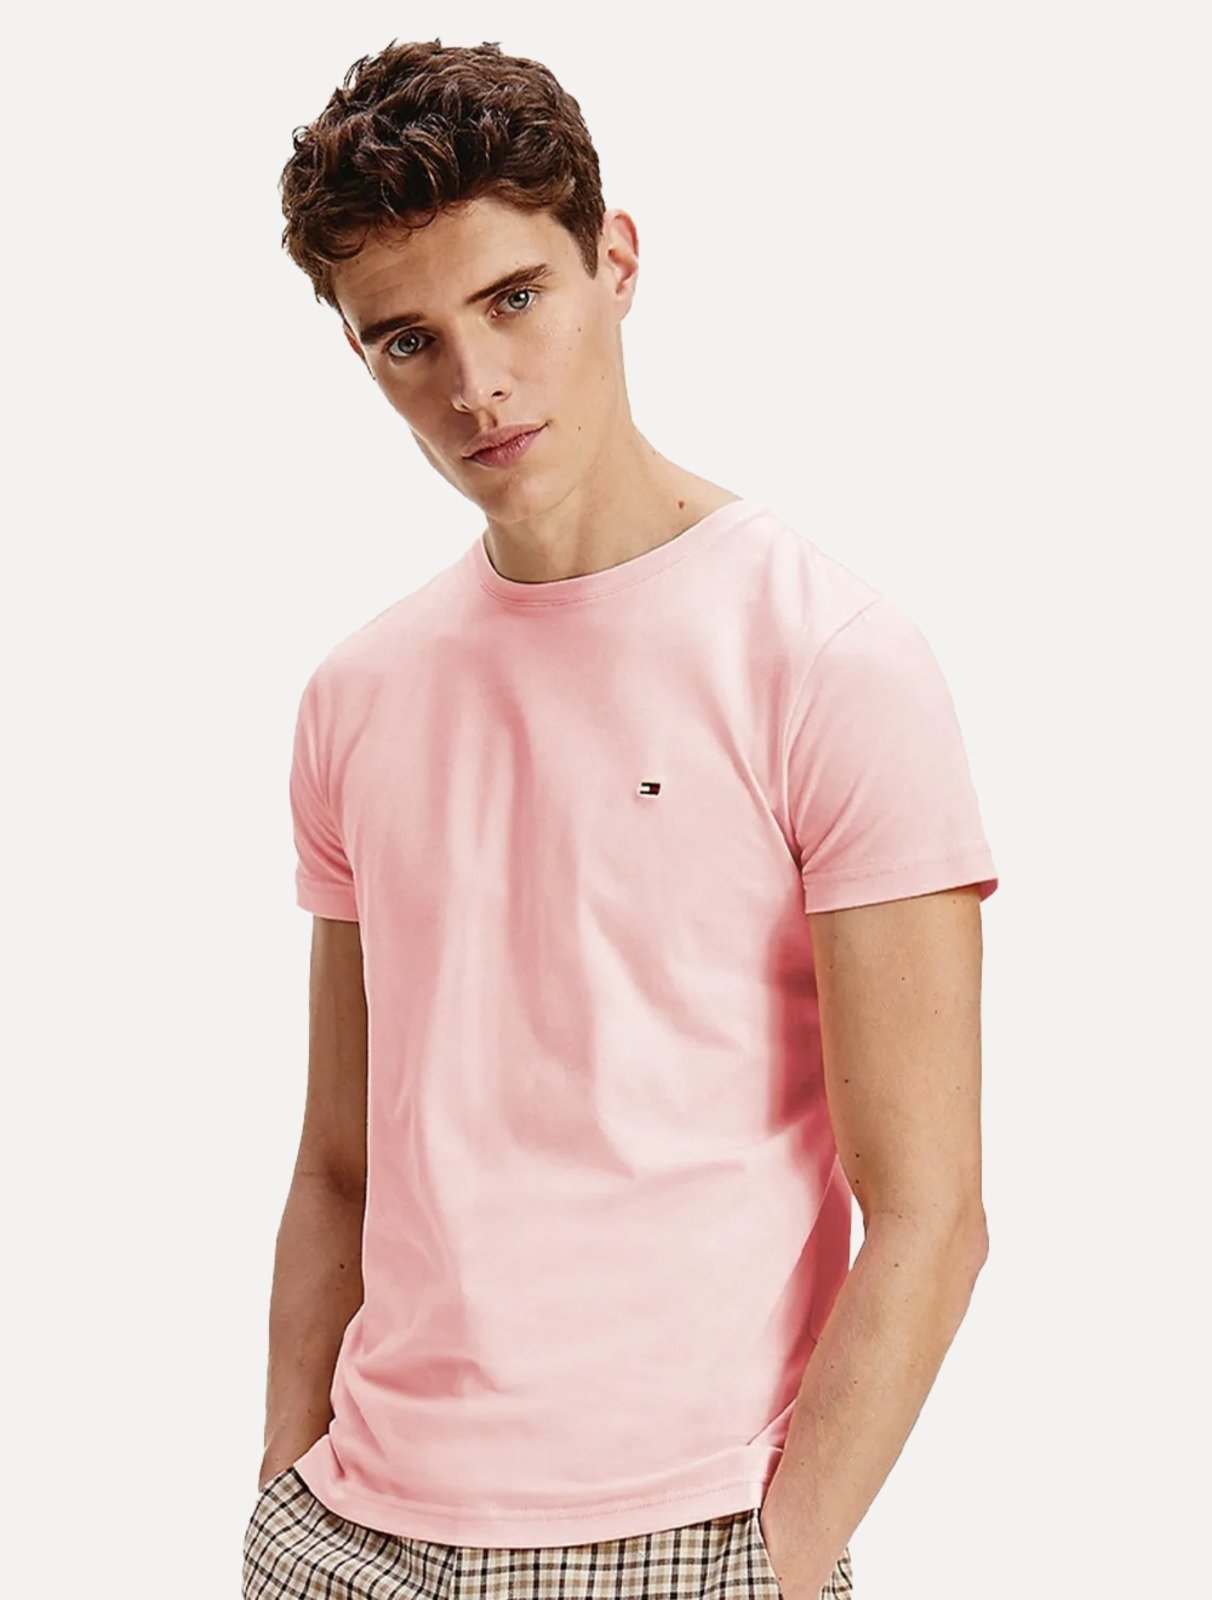 Camiseta Tommy Hilfiger Masculina Essential Cotton Rosa Claro